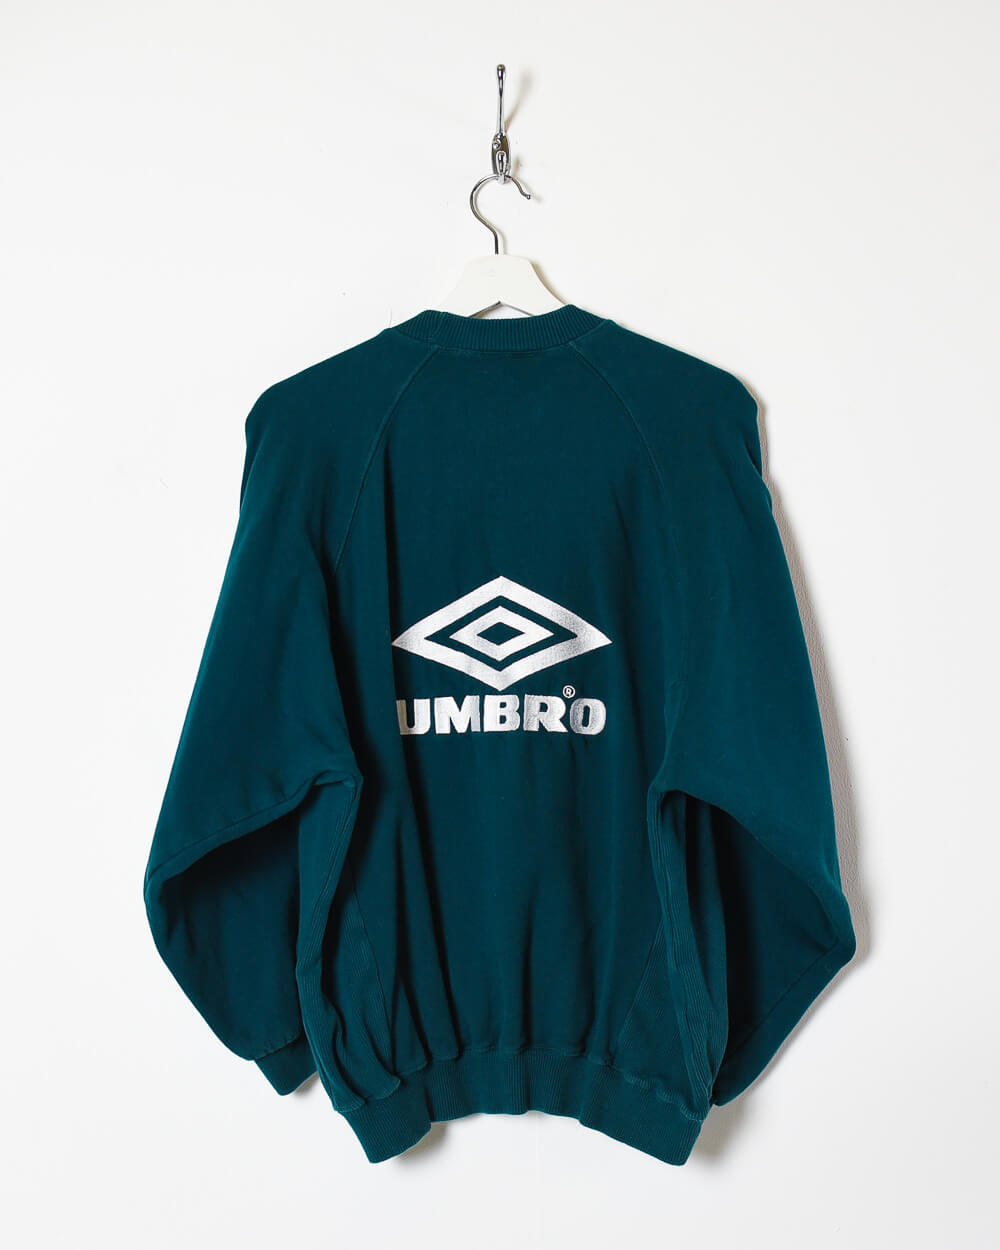 Umbro Sweatshirt - Medium